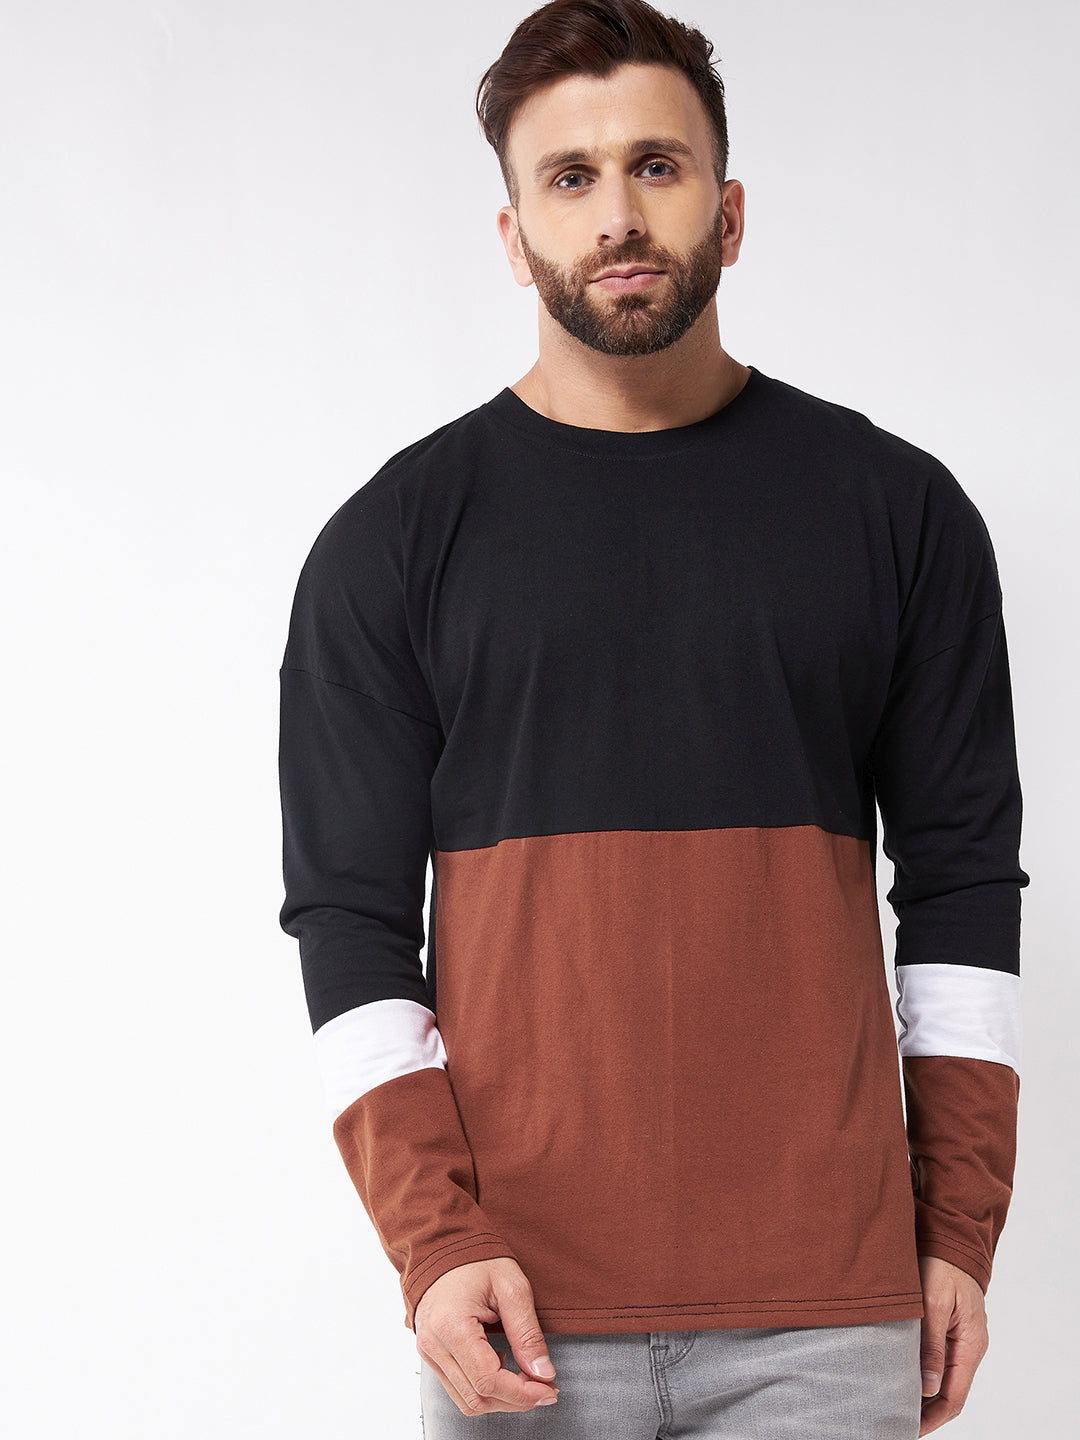 Oversized Black and Brown Drop Shoulder Color Block T-Shirt